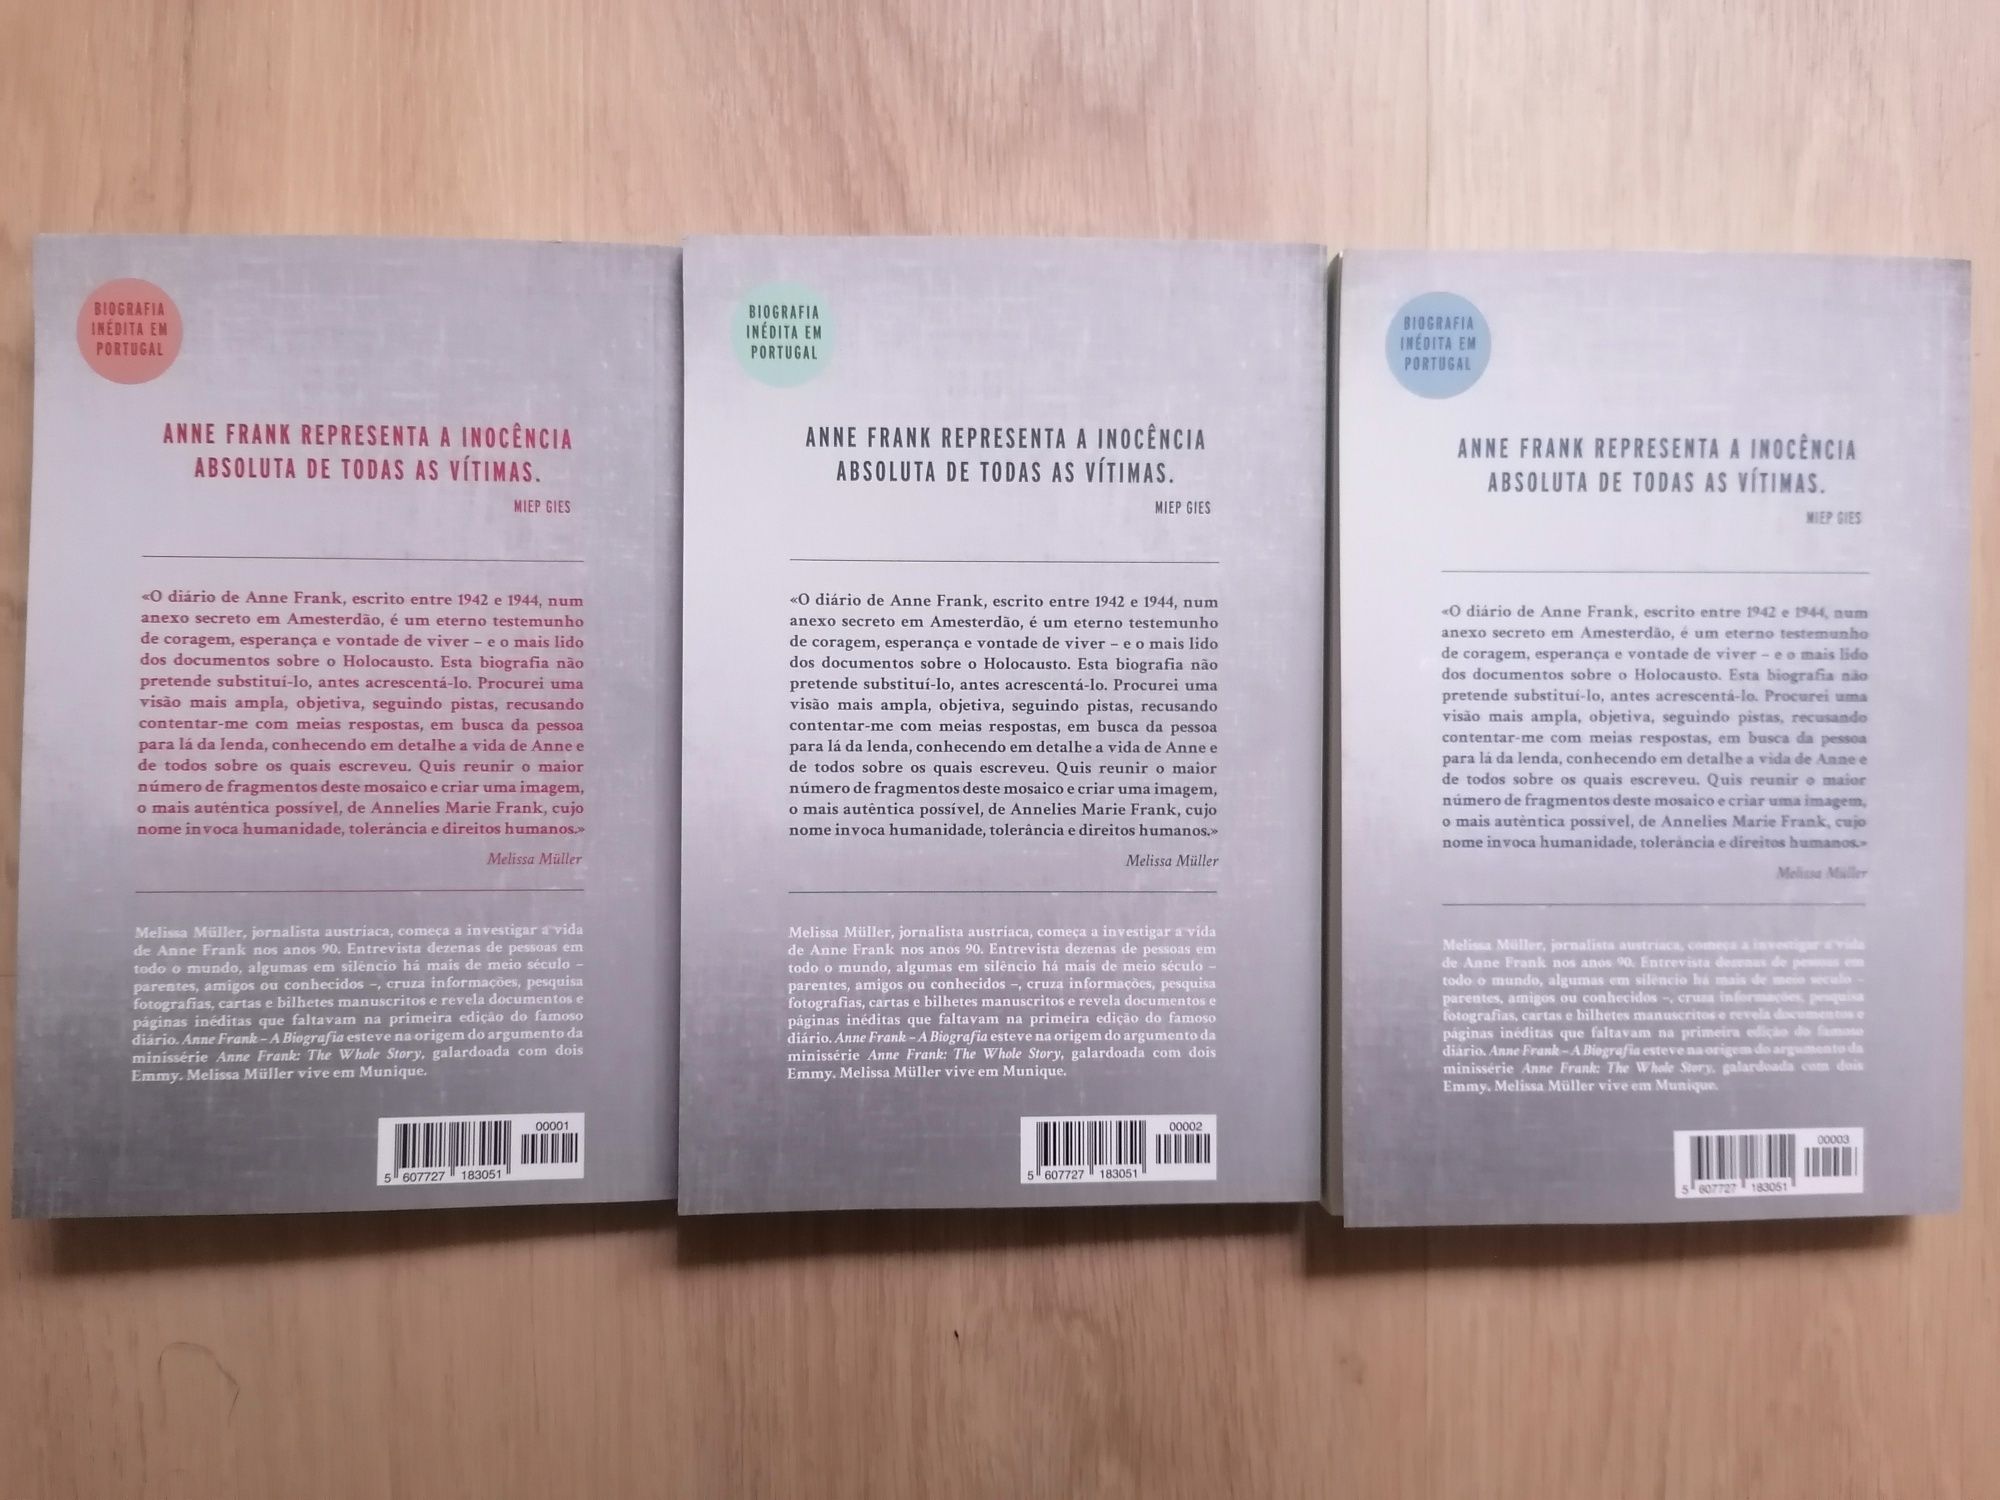 Biografia de Anne Frank (Melissa Muller) 3 volumes